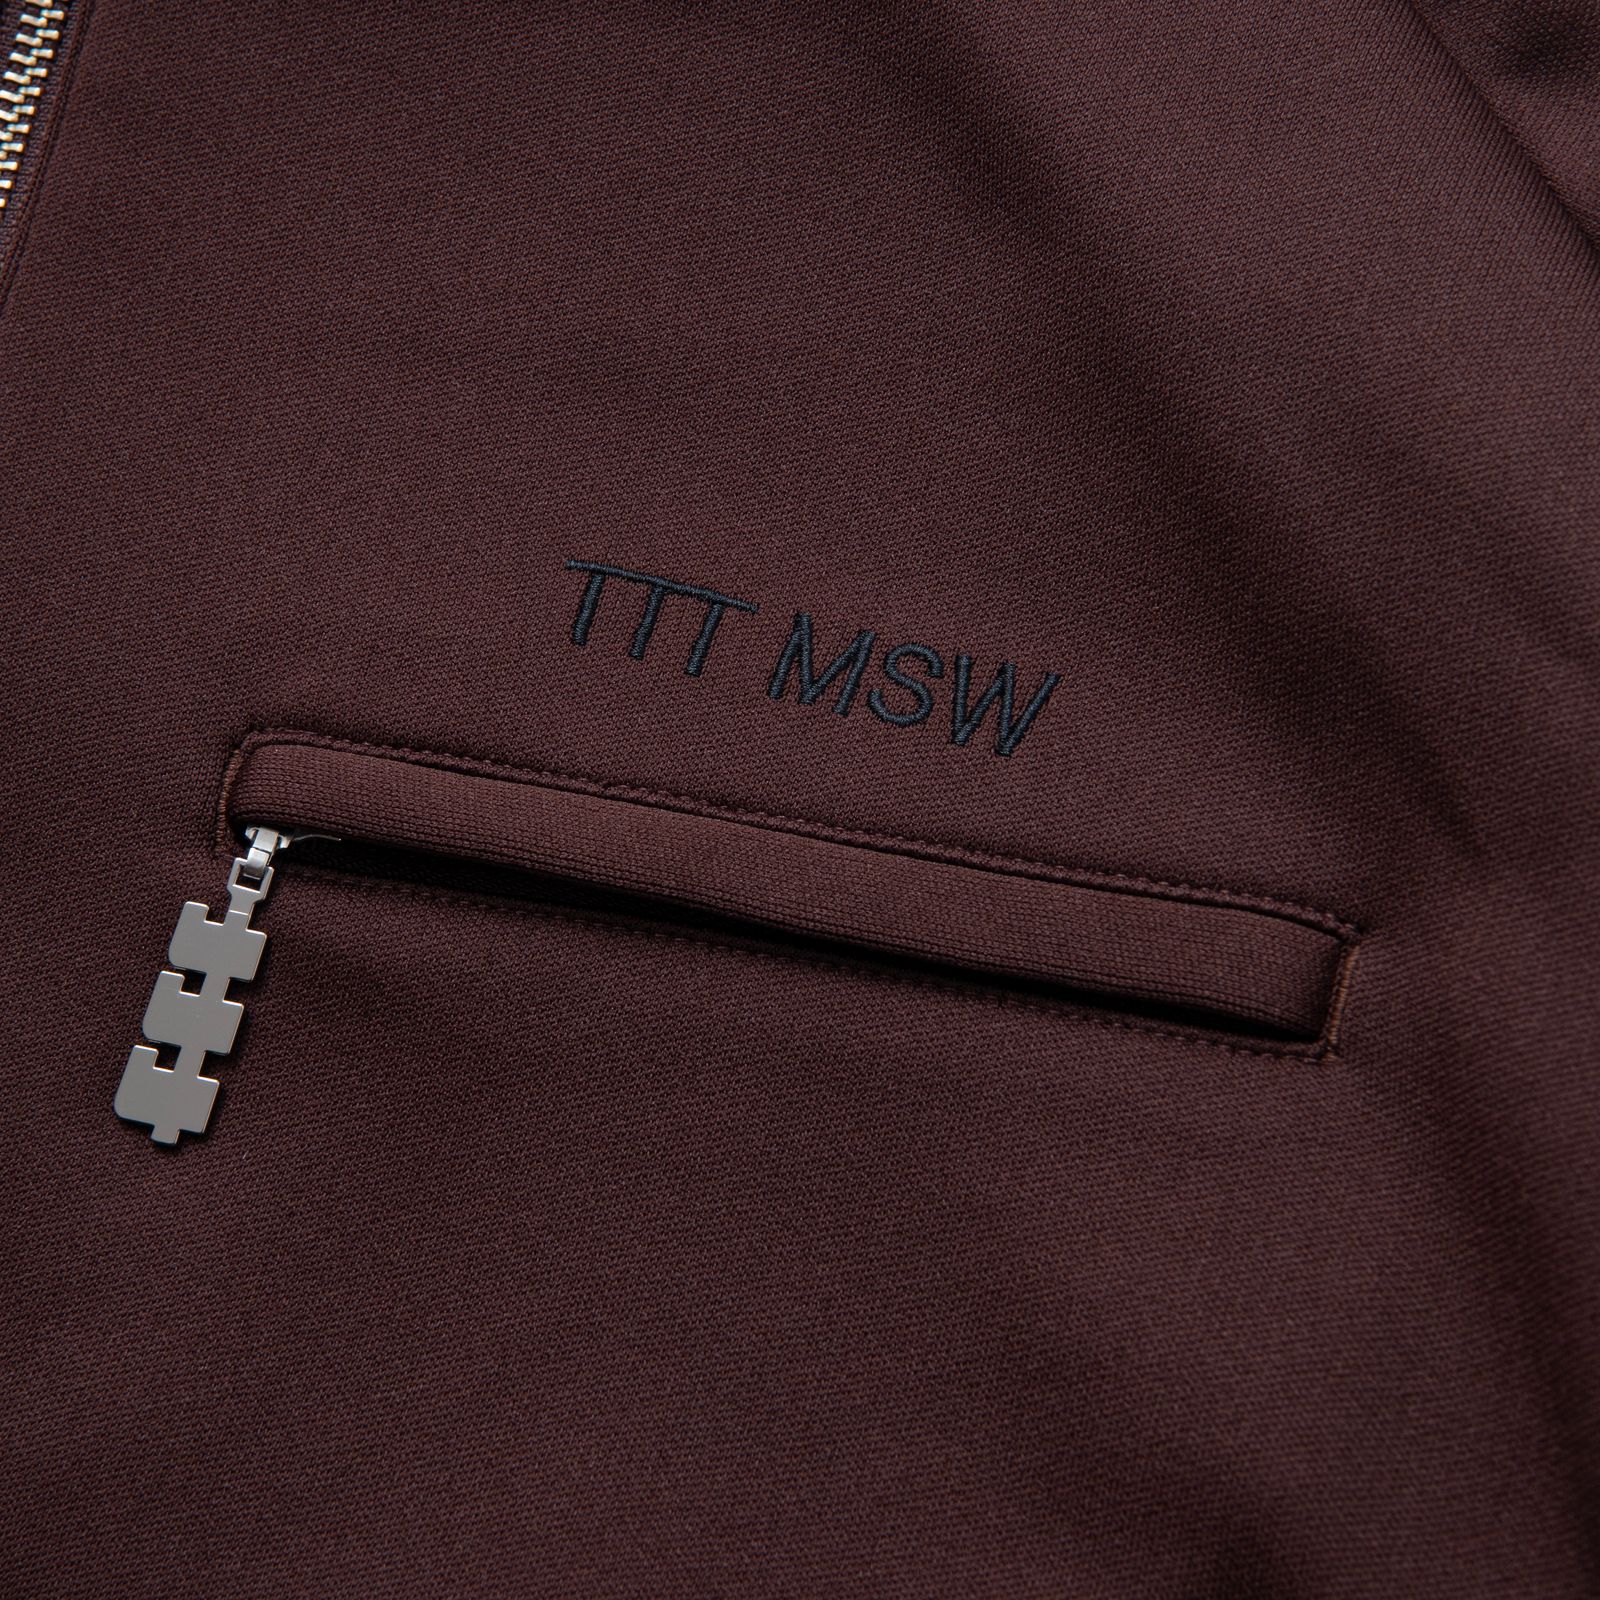 TTT MSW - 【残り一点】Track Suit Jacket | ACRMTSM ONLINE STORE